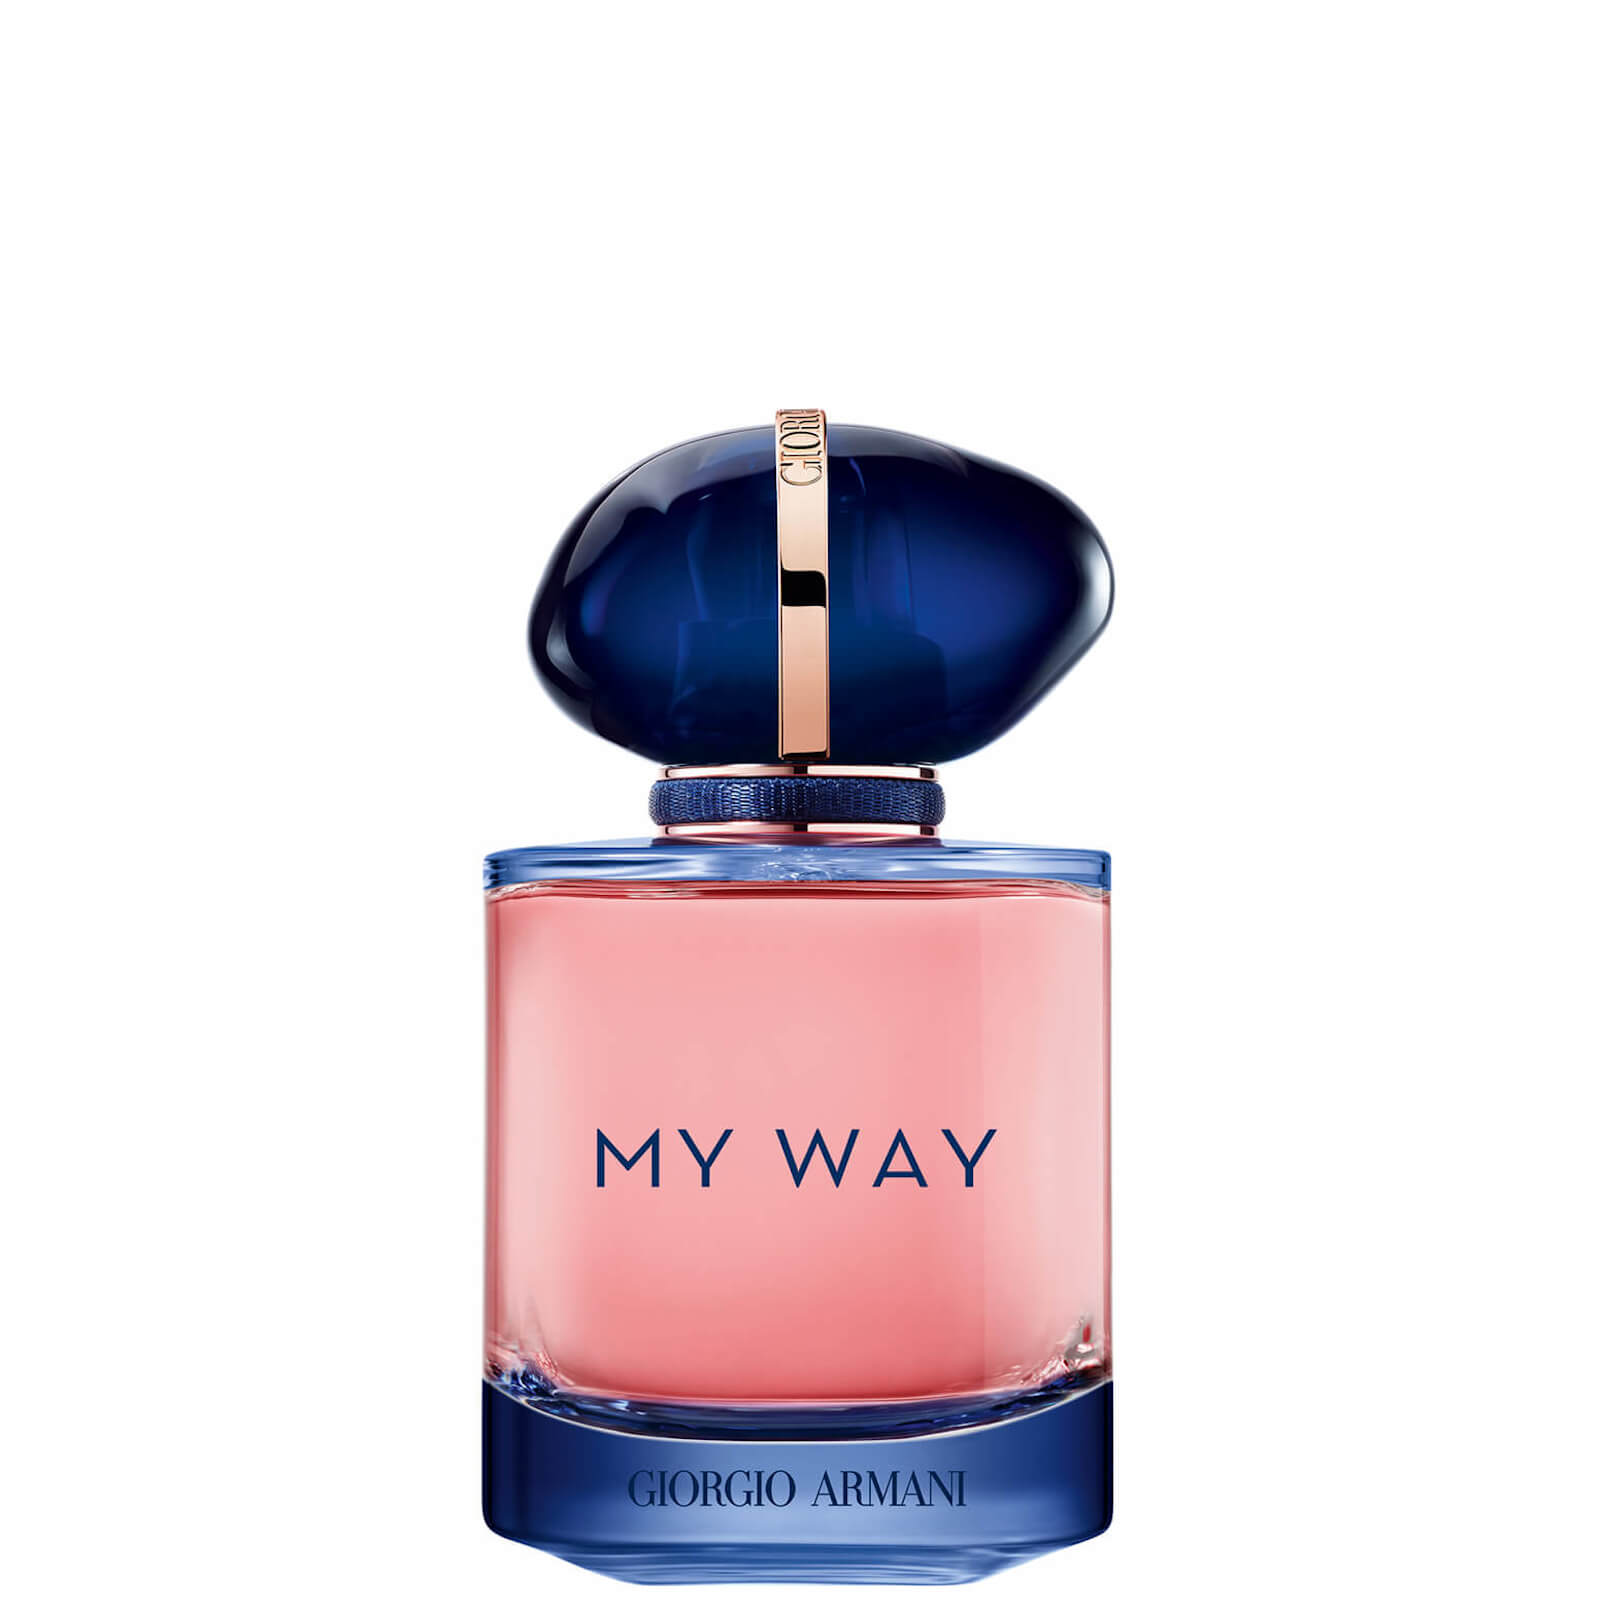 Image of Armani My Way Eau de Parfum Intense - 50ml